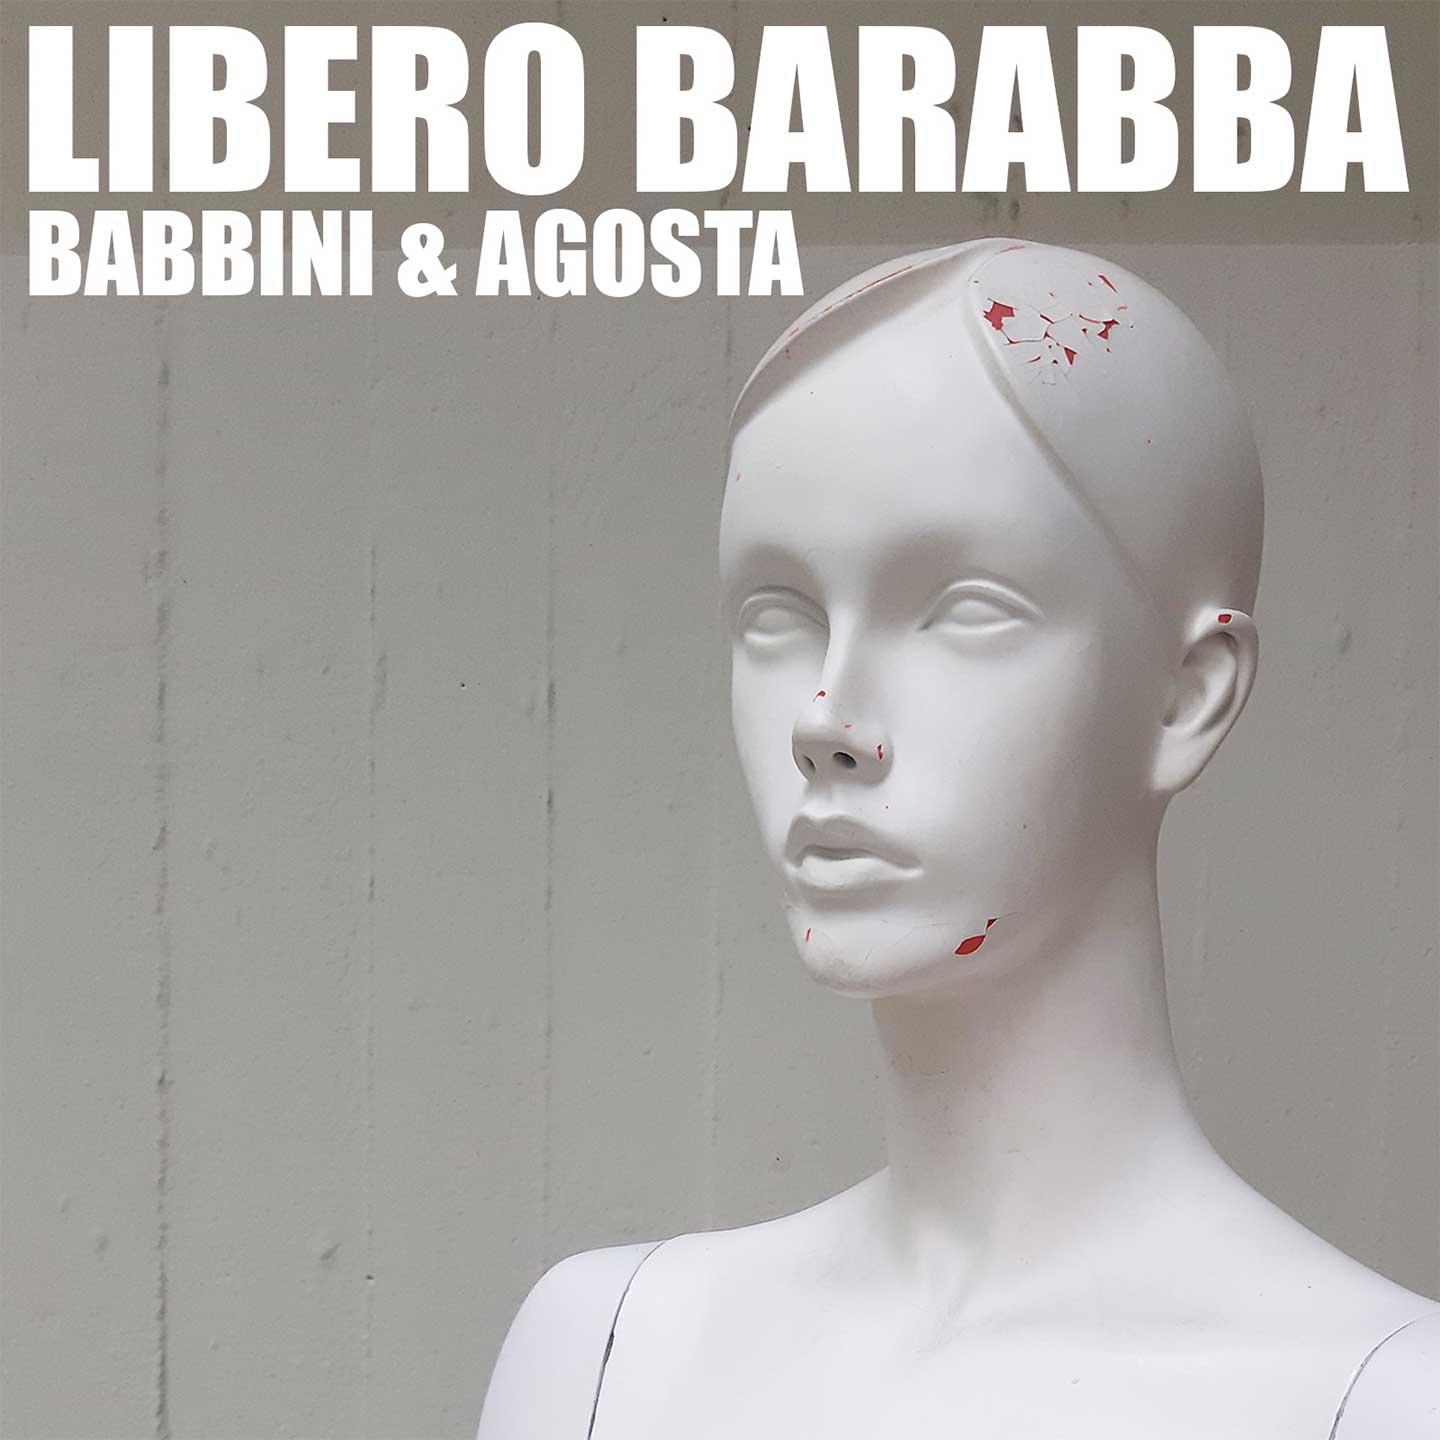 You are currently viewing “LIBERO BARABBA 2021” – BABBINI & AGOSTA